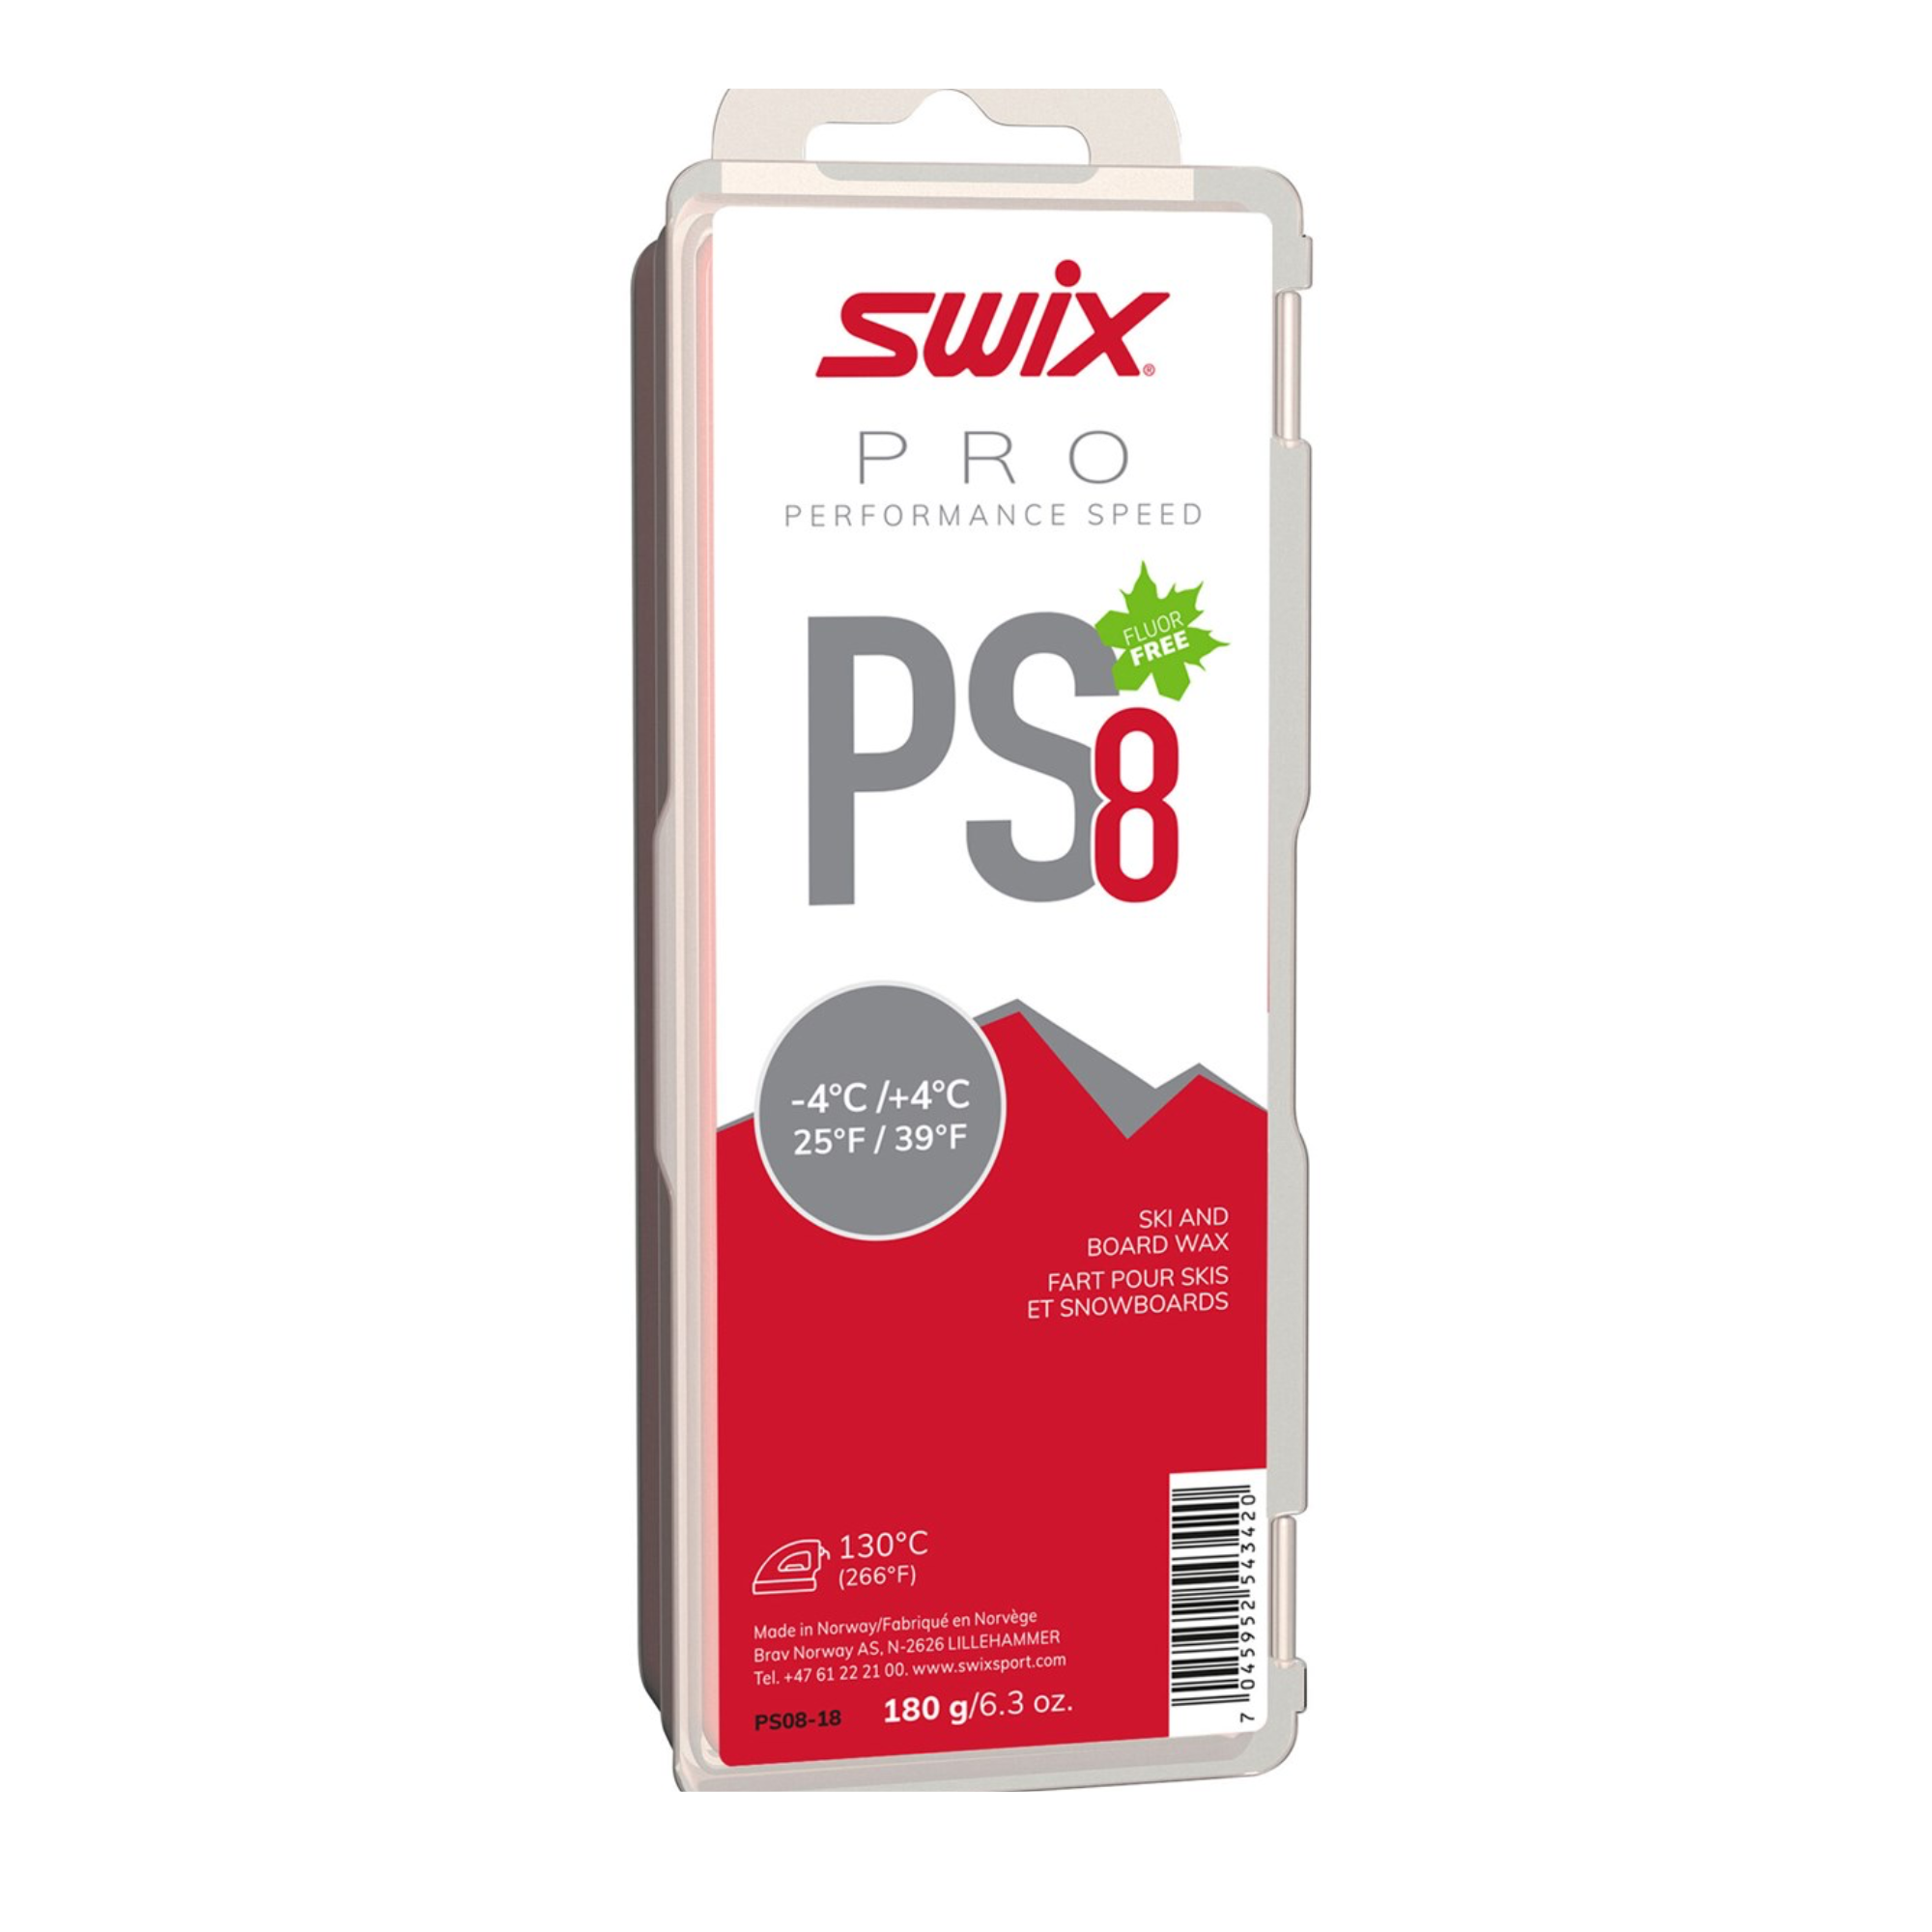 Swix PS 8 Performance Speed Wax - Red - 180gm